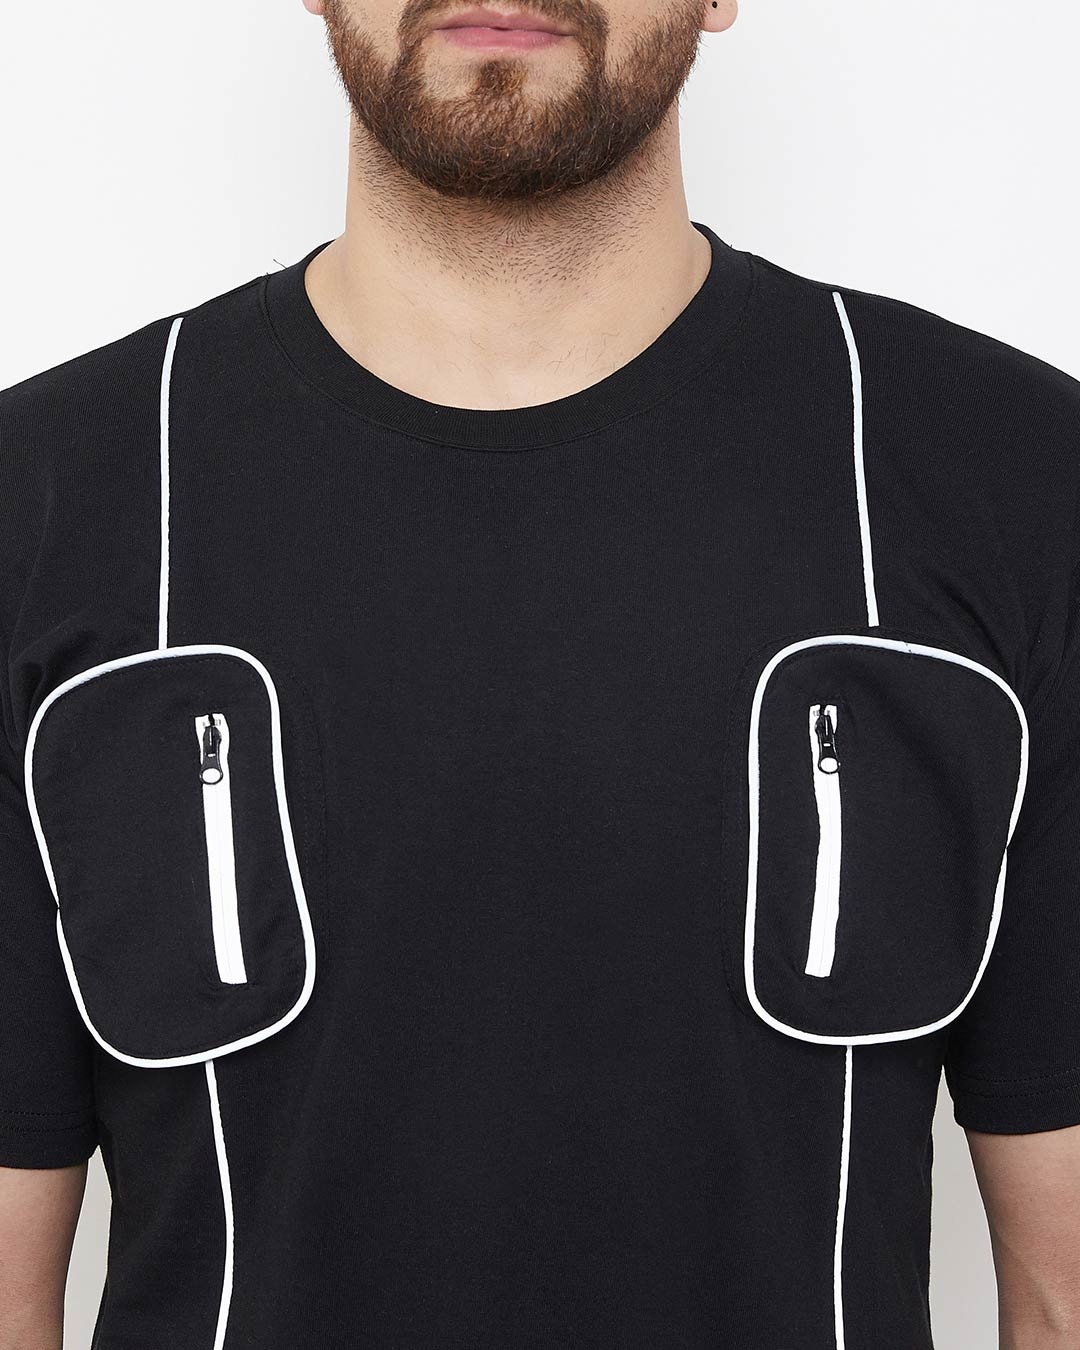 Shop Black Chest Pocket Reflective Piping T-Shirt